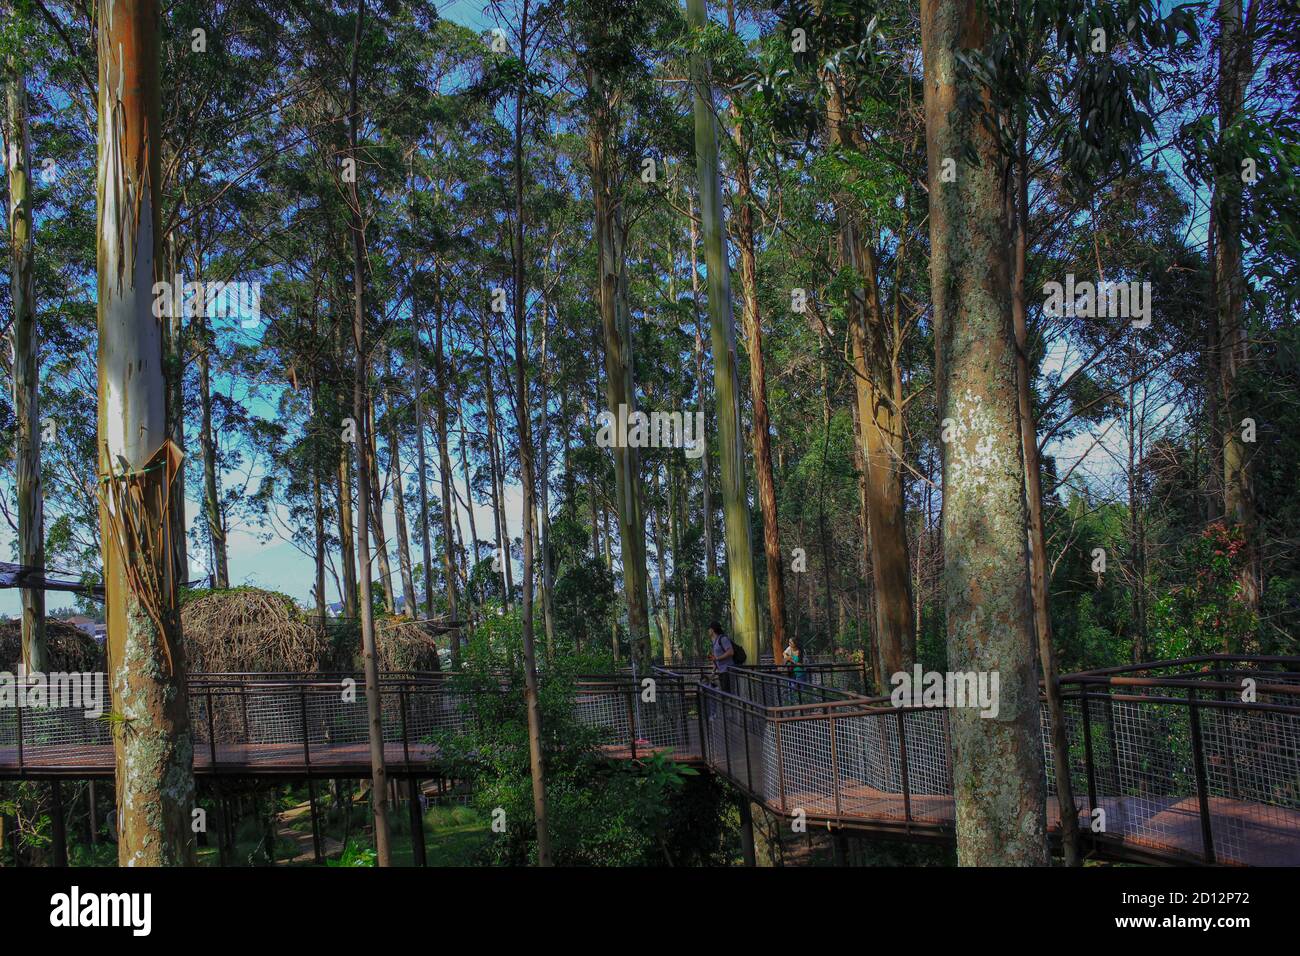 Trees in the park, Dusun Bambu, Bandung, West Java, Indonesia Trees in the park, Dusun Bambu, Bandung, West Java, Indonesia Stock Photo